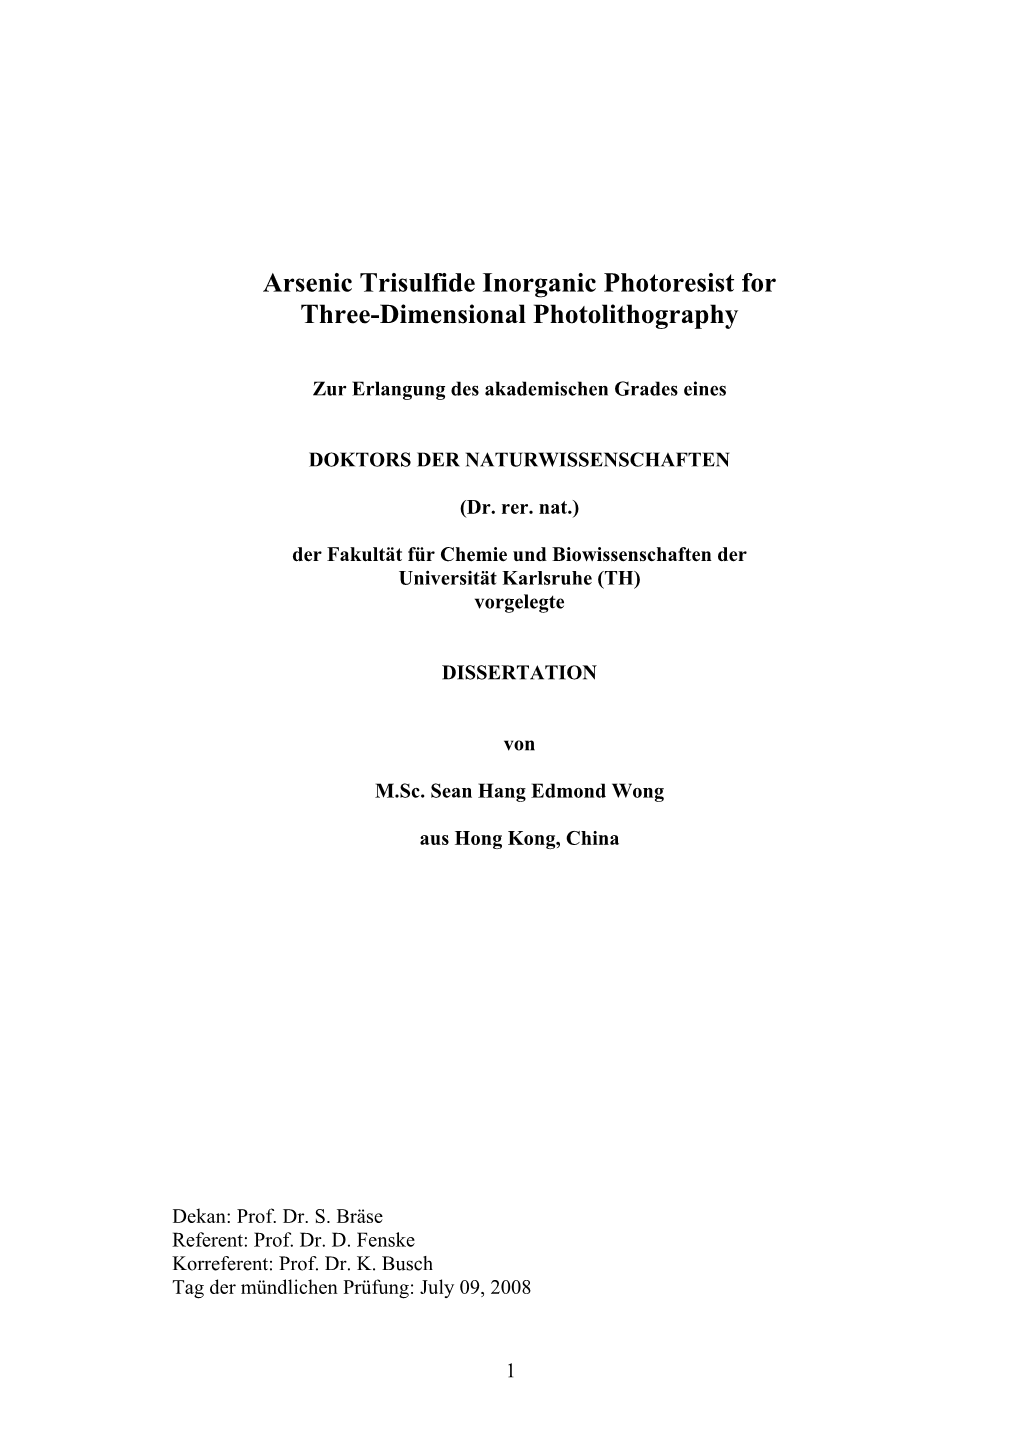 Arsenic Trisulfide Inorganic Photoresist for Three-Dimensional Photolithography